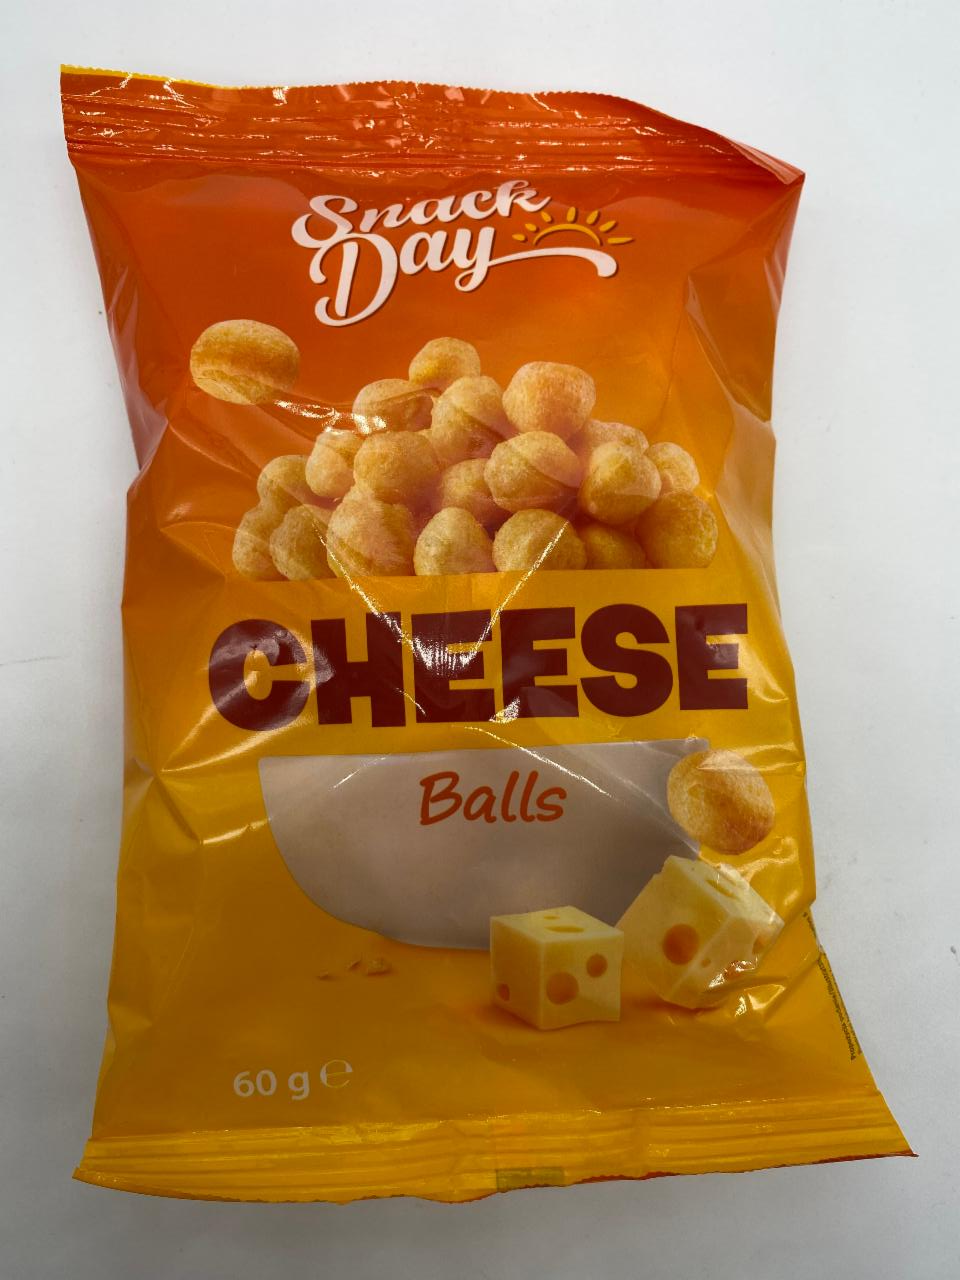 Фото - Сырные шарики Cheese Balls Snack Day